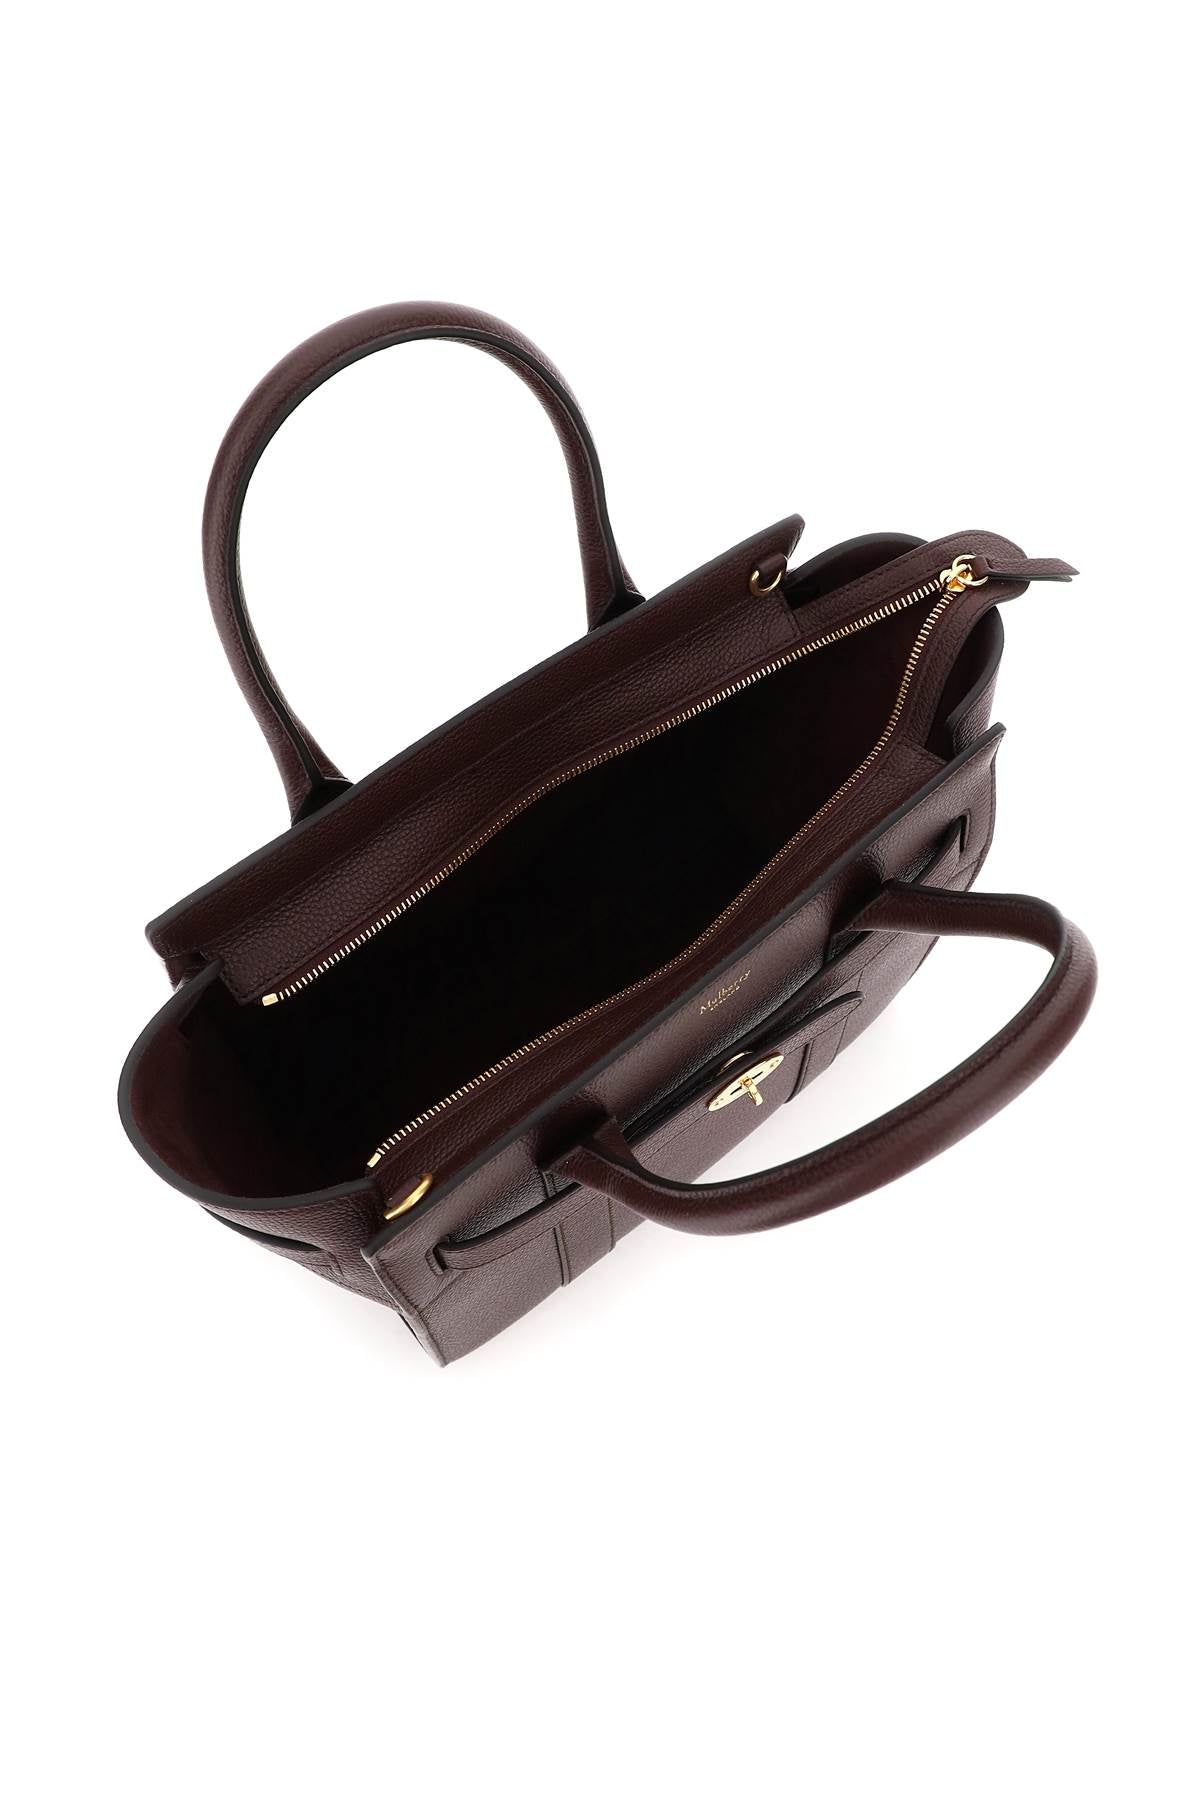 Mulberry zipped bayswater handbag-1